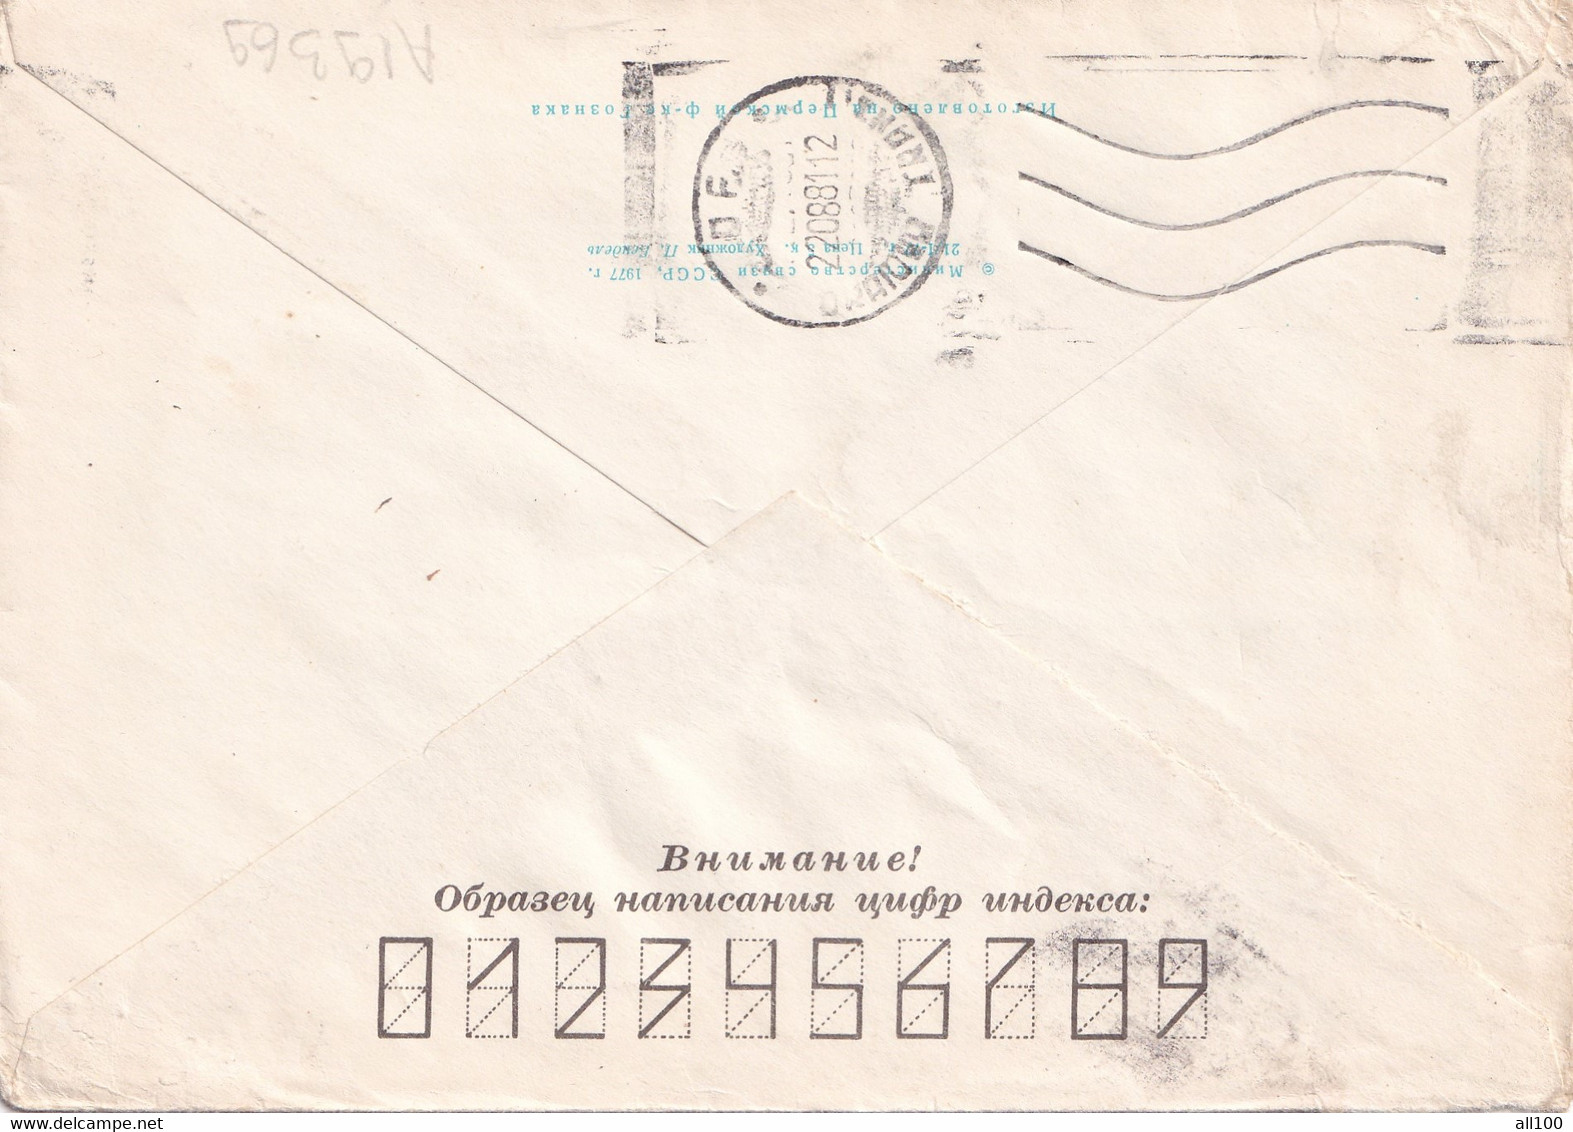 A19369 - A S NOVIKOV RUSSIAN SOVIET WRITER COVER ENVELOPE USED 1981 SOVIET UNION USSR SENT TO CRAIOVA ROMANIA RSR - Brieven En Documenten